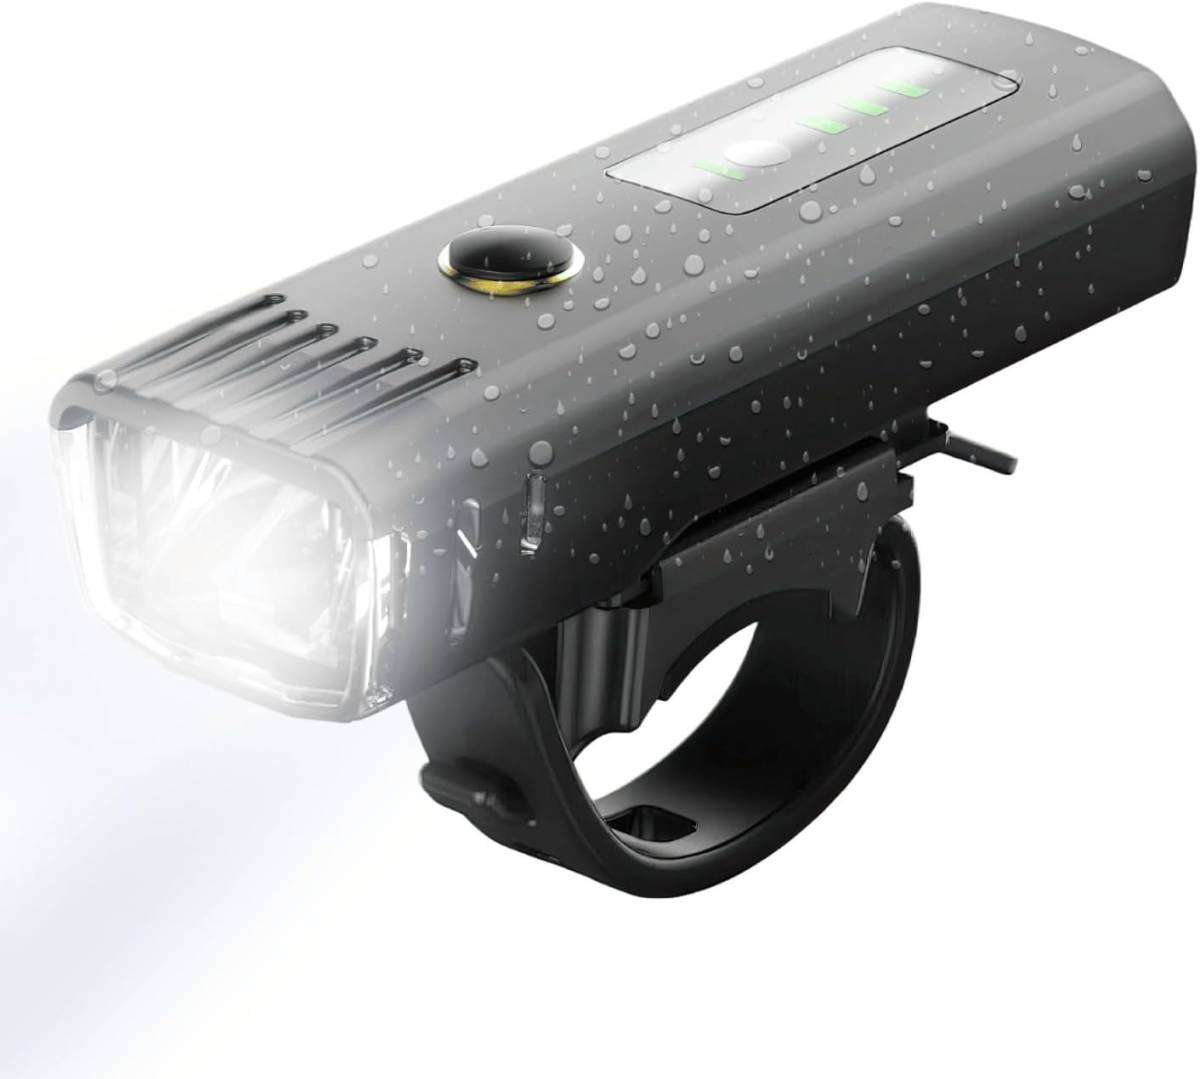  bicycle light 4 -step lighting mode USB rechargeable LED light waterproof dustproof light sensor automatic lighting mode installing high luminance maximum 1000 lumen 